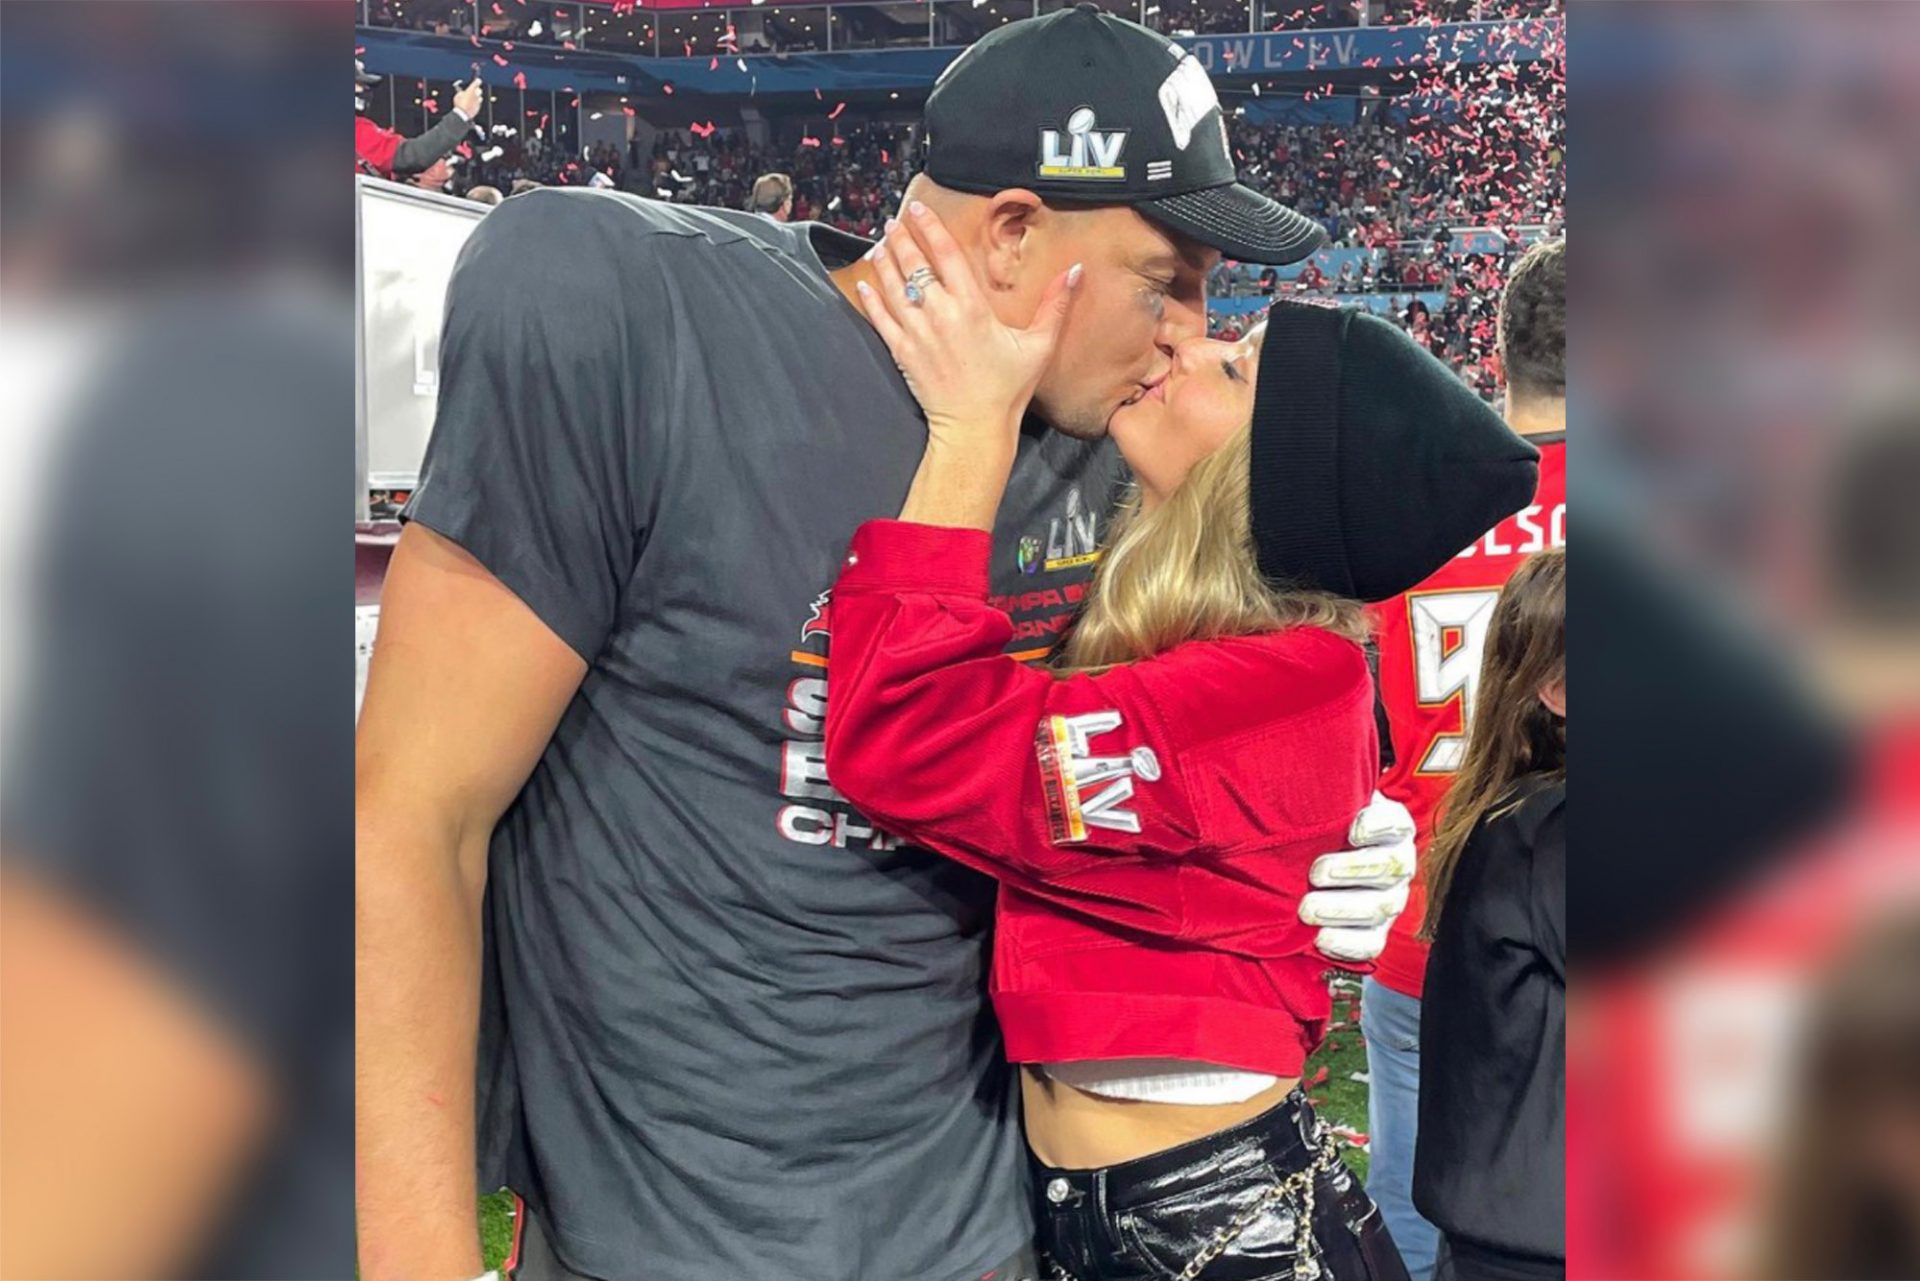 Camille Kostek kisses boyfriend Rob Gronkowski after Immense Bowl 2021